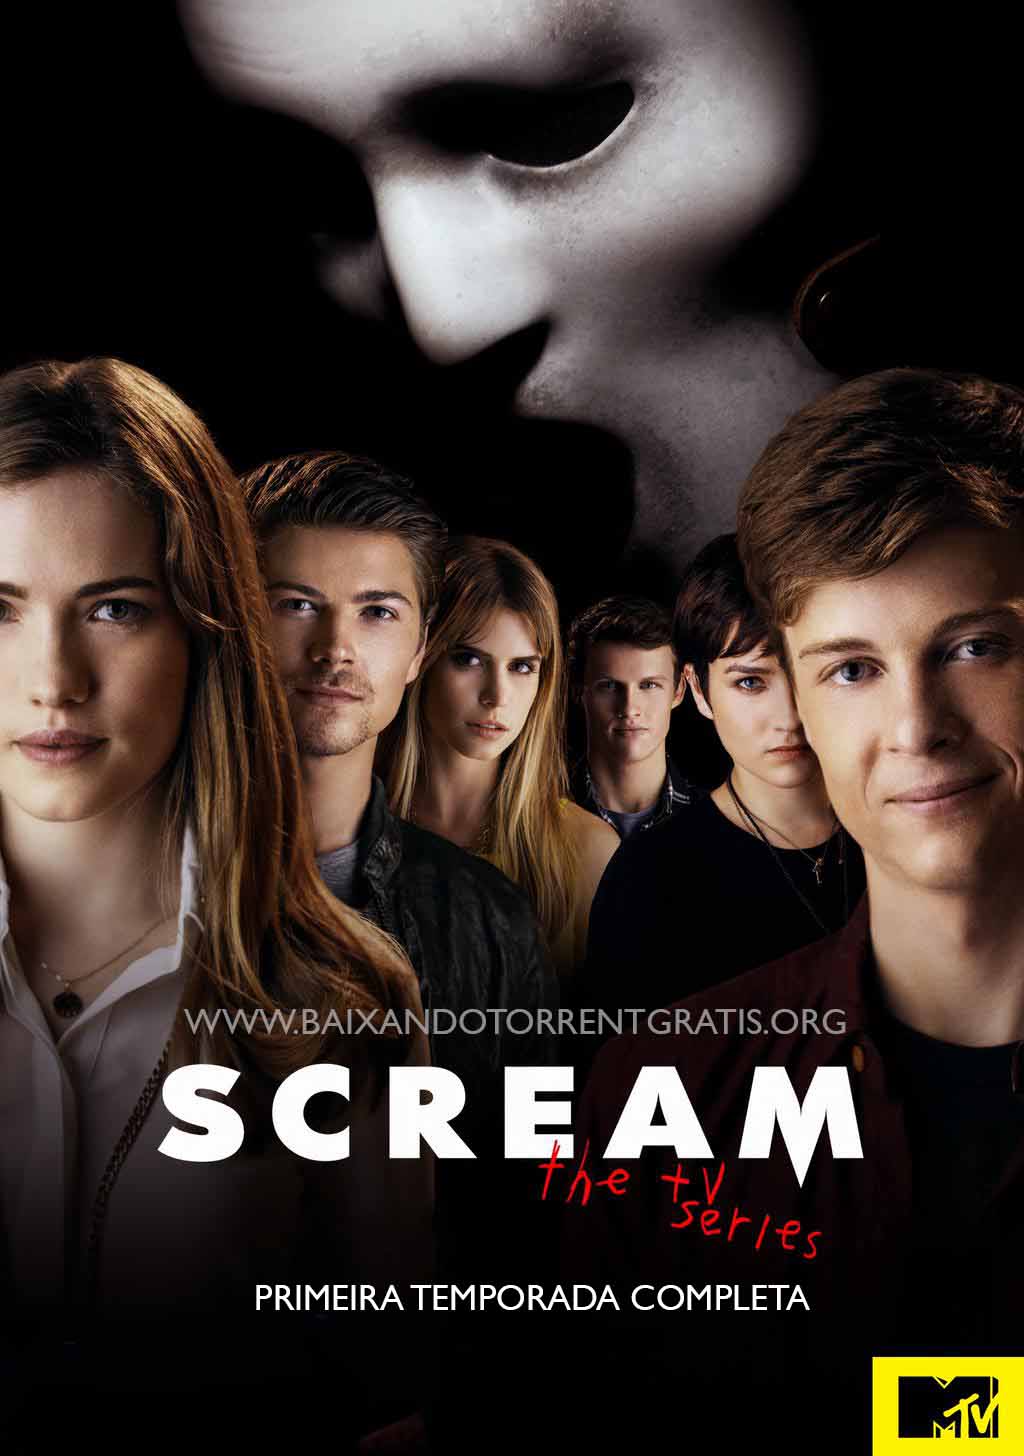 Download Scream Dublado Completo Download Torrent